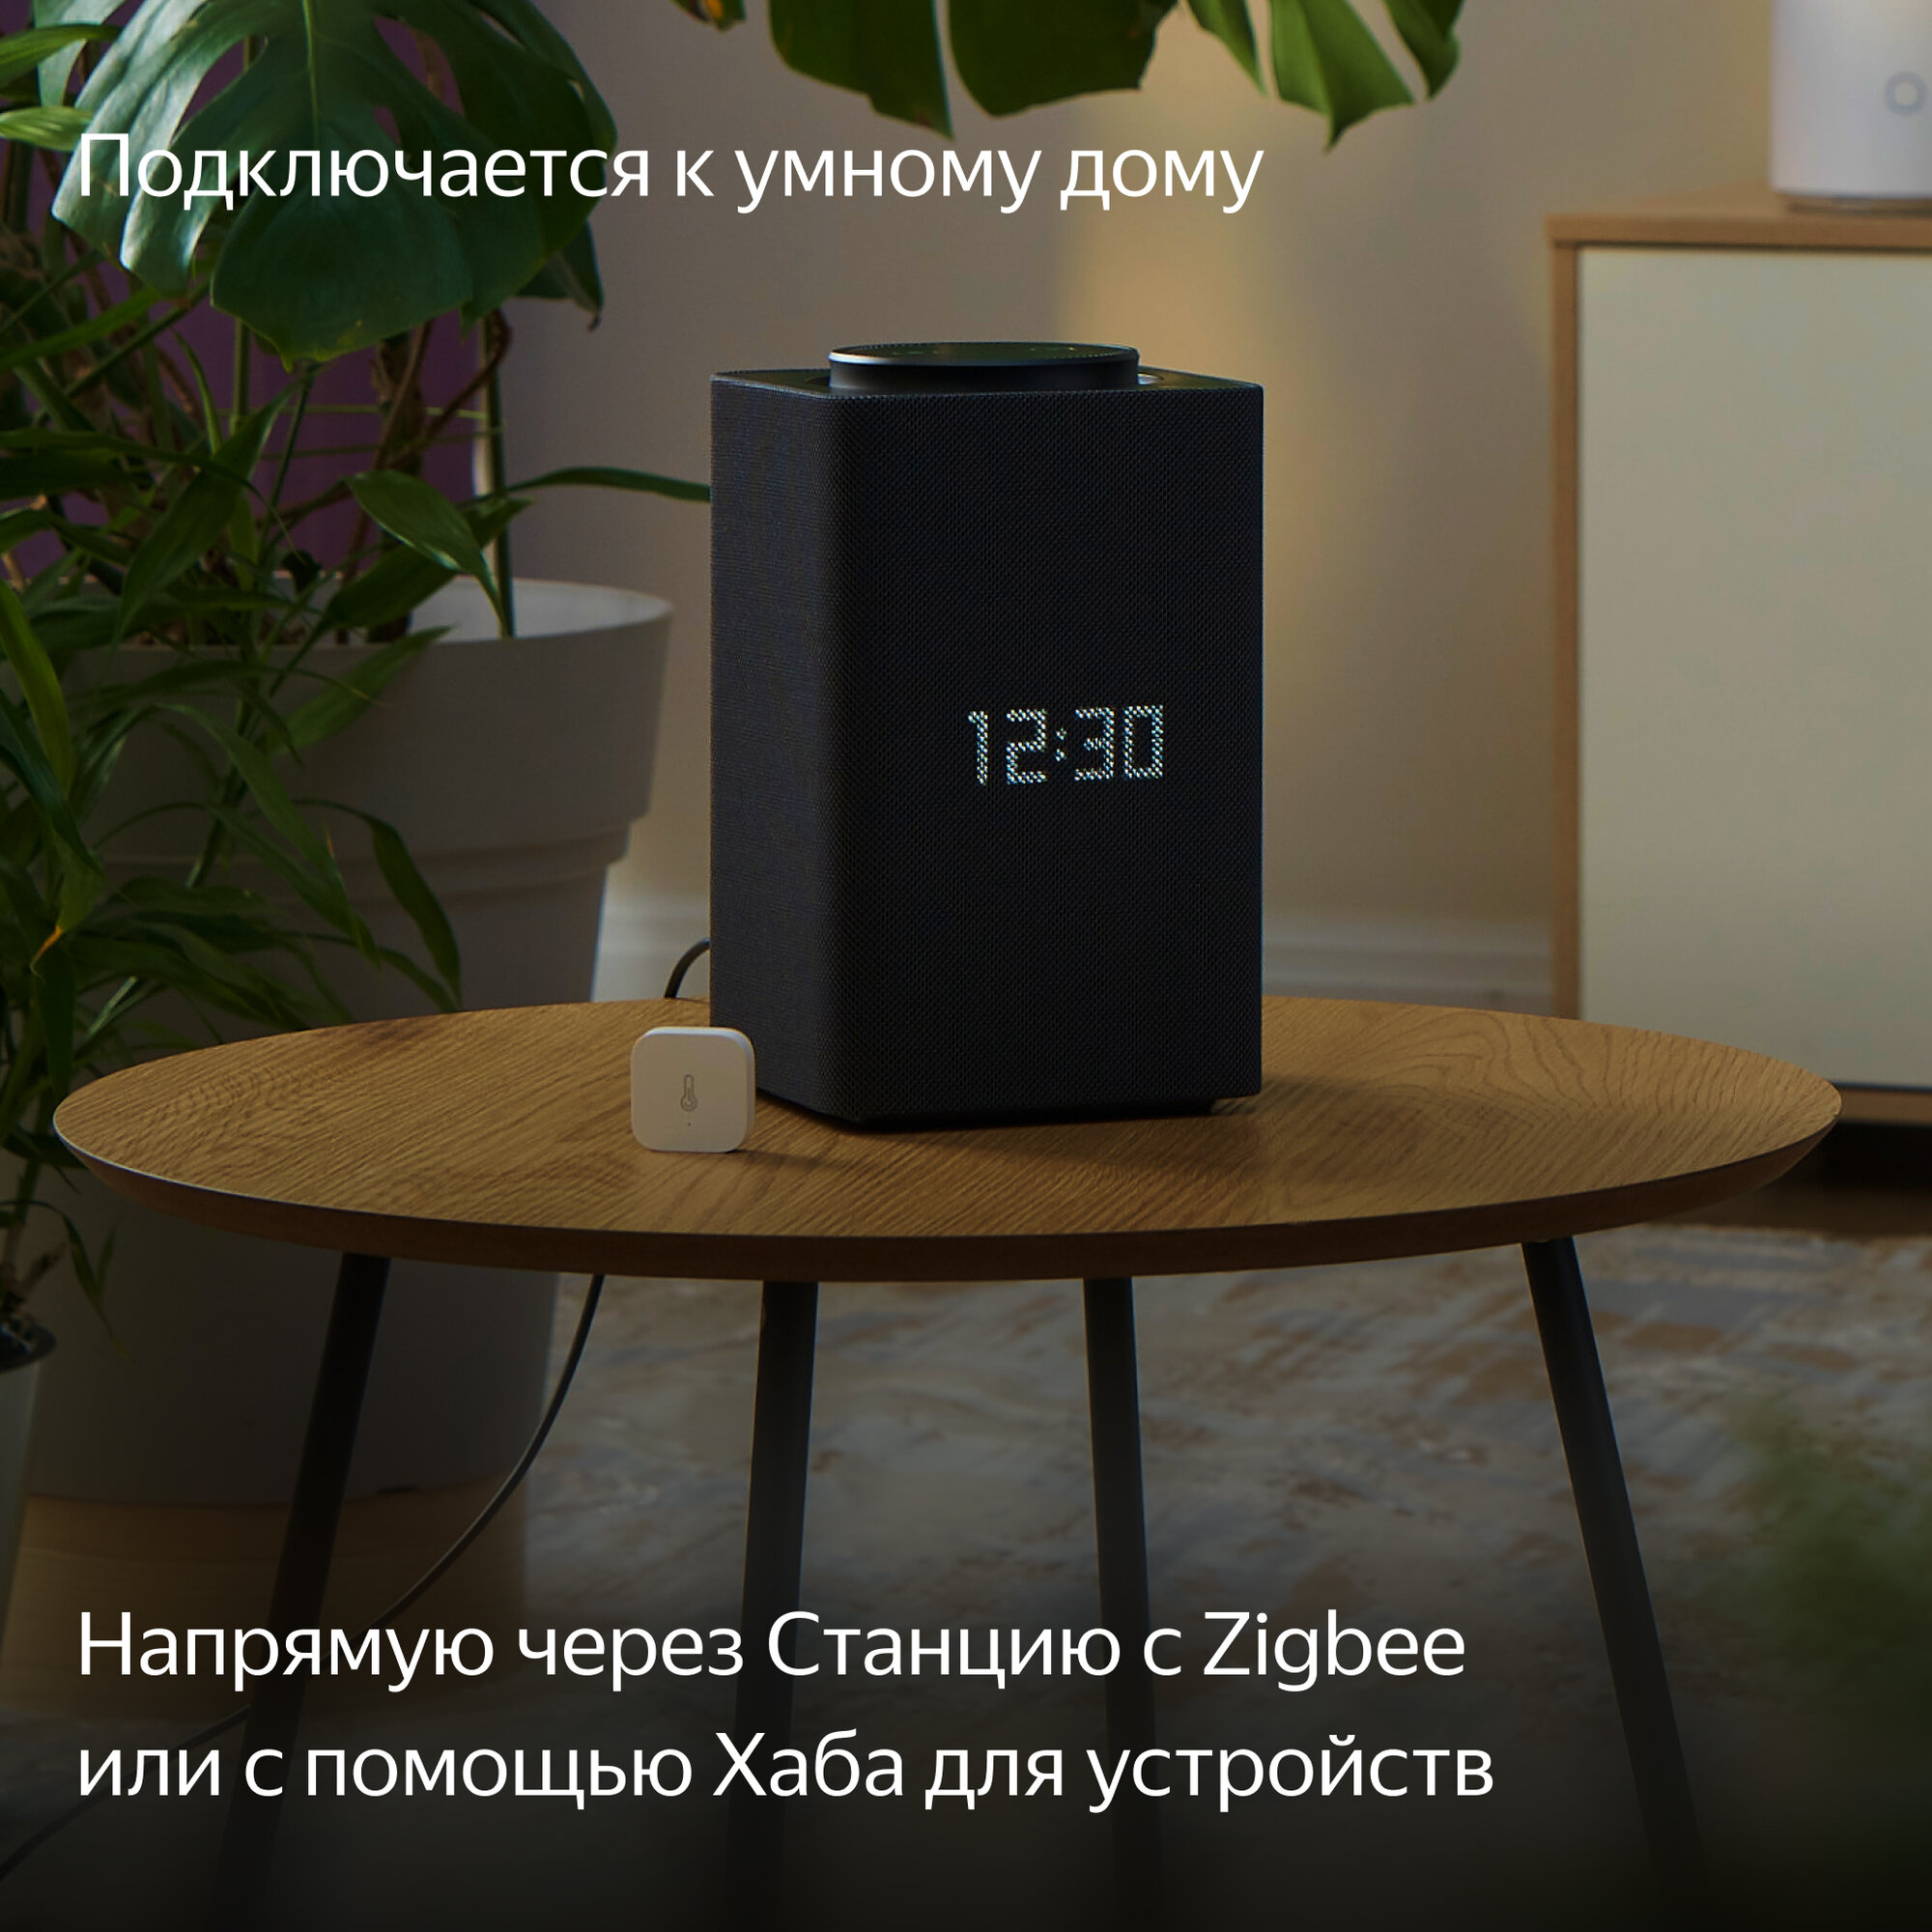 Яндекс Датчик температуры и влажности Zigbee - фото №4